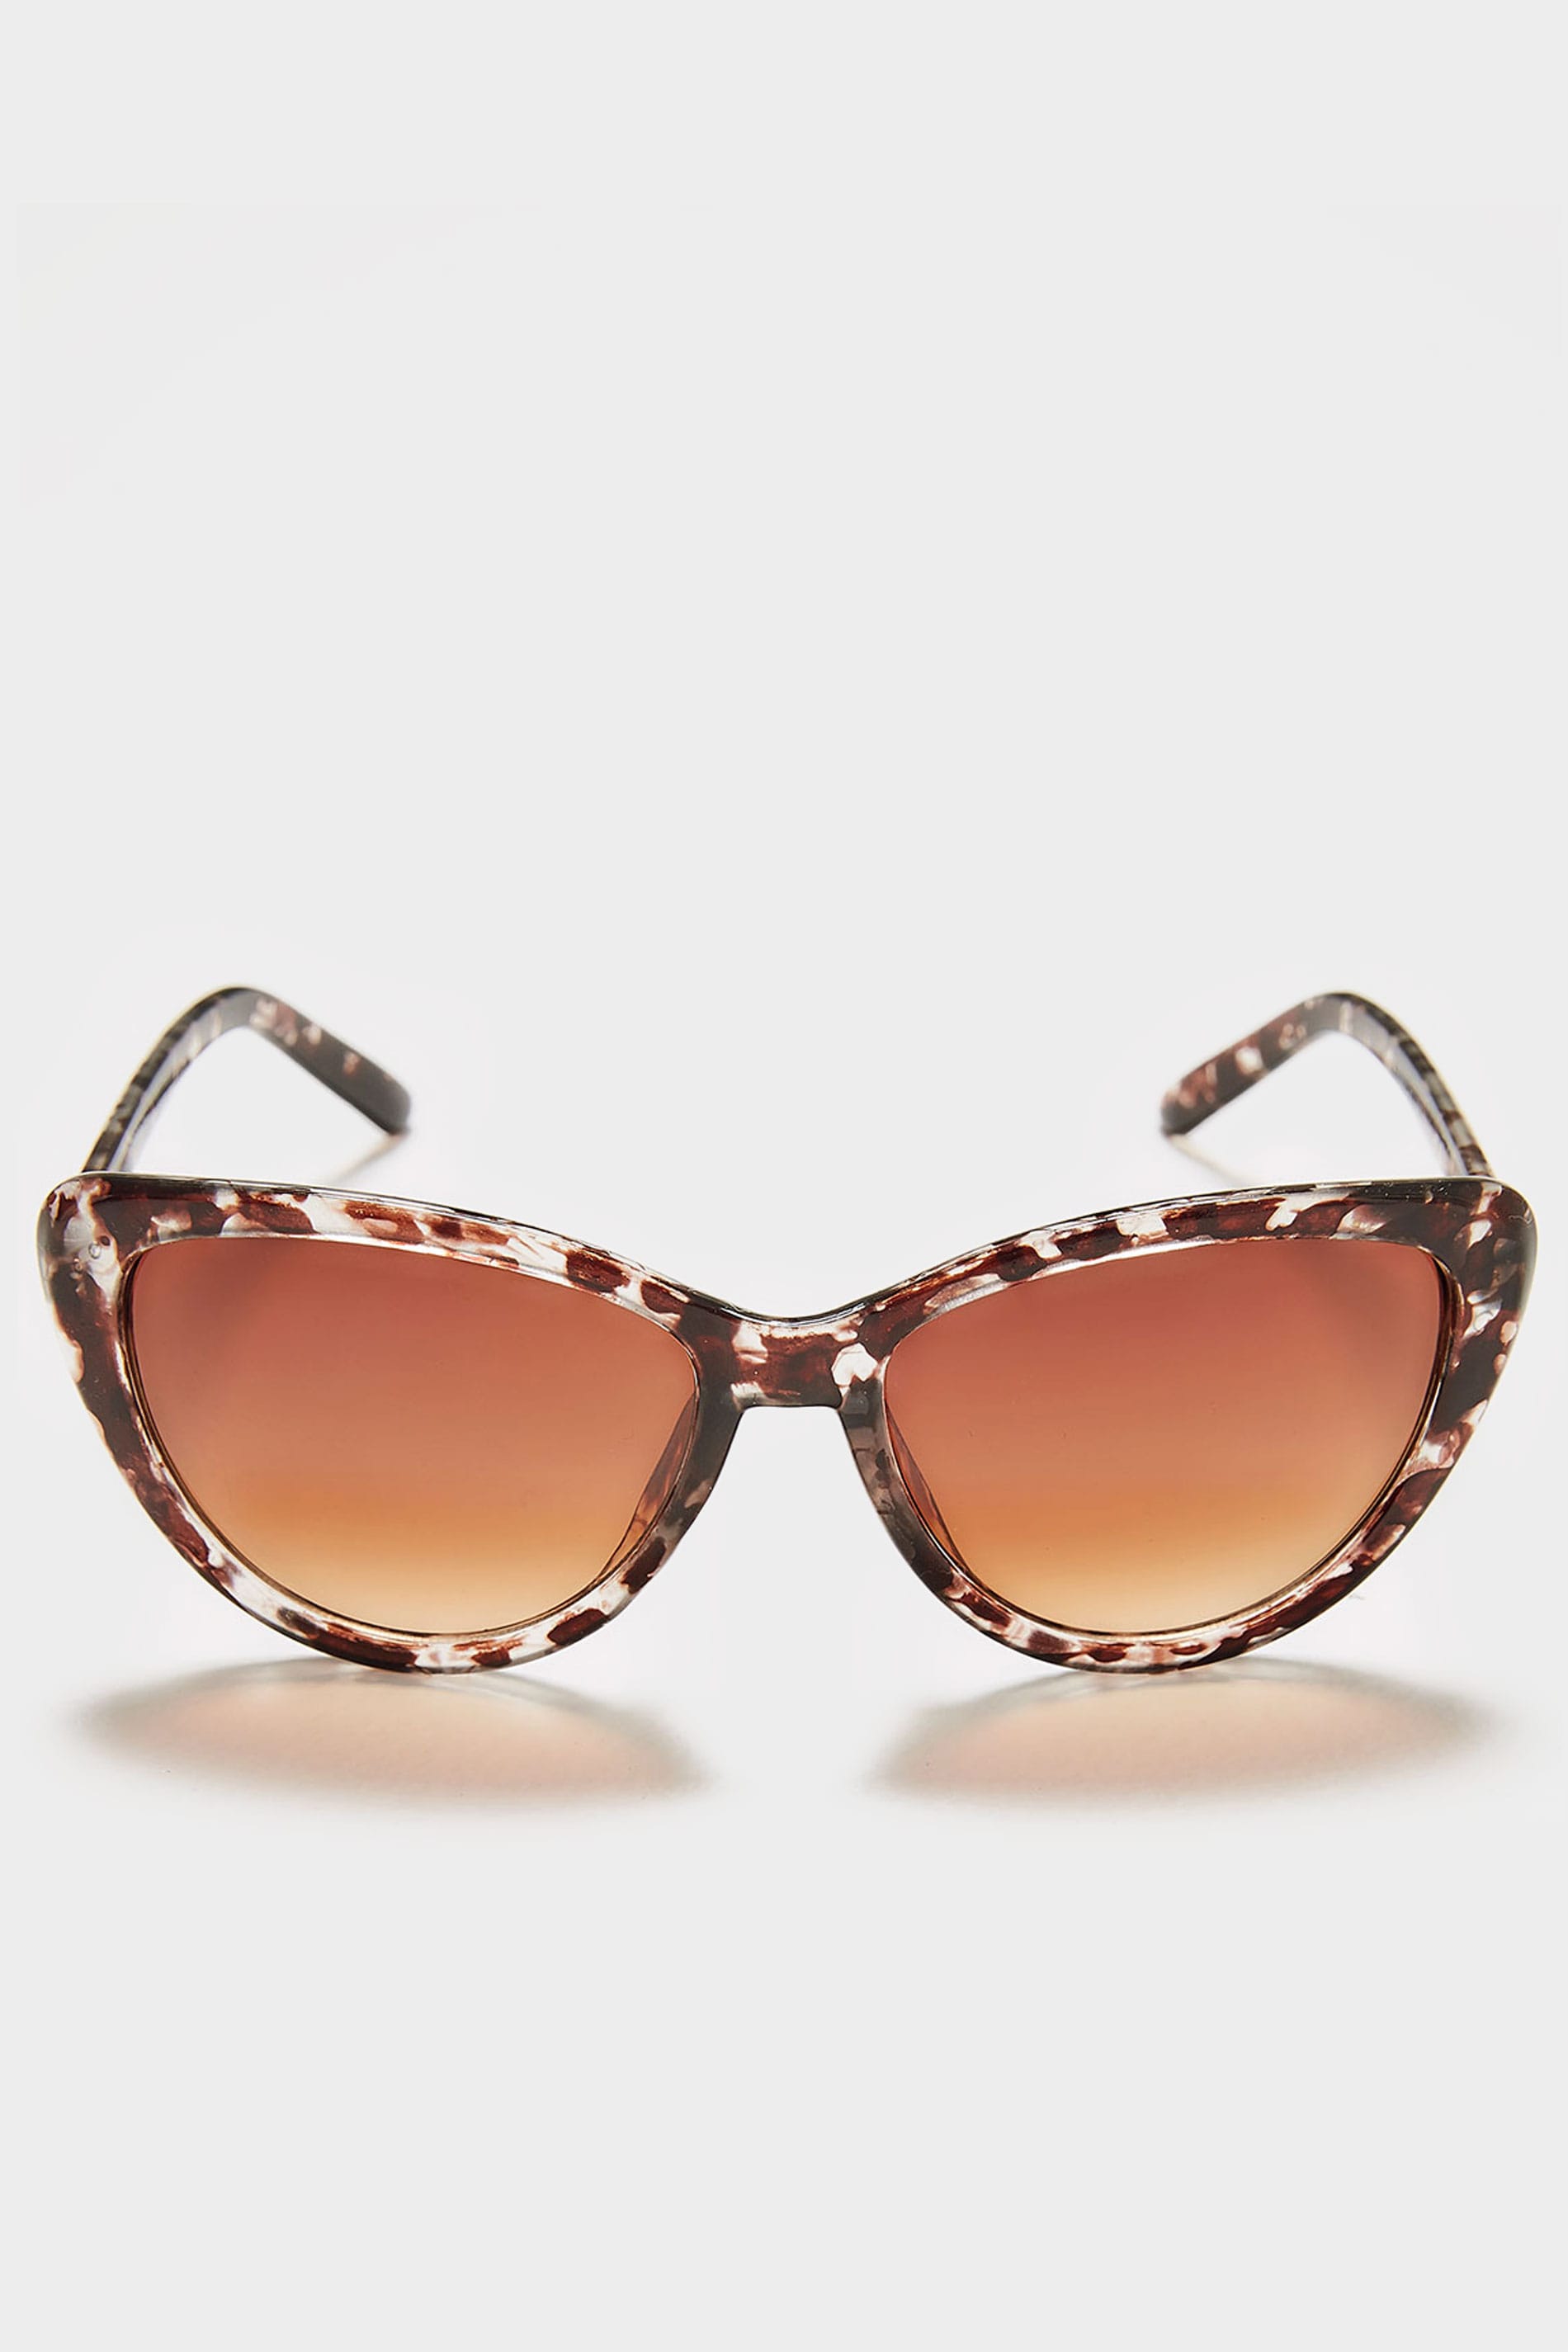 Brown Tortoiseshell Large Cat Eye Sunglasses With UV Protection